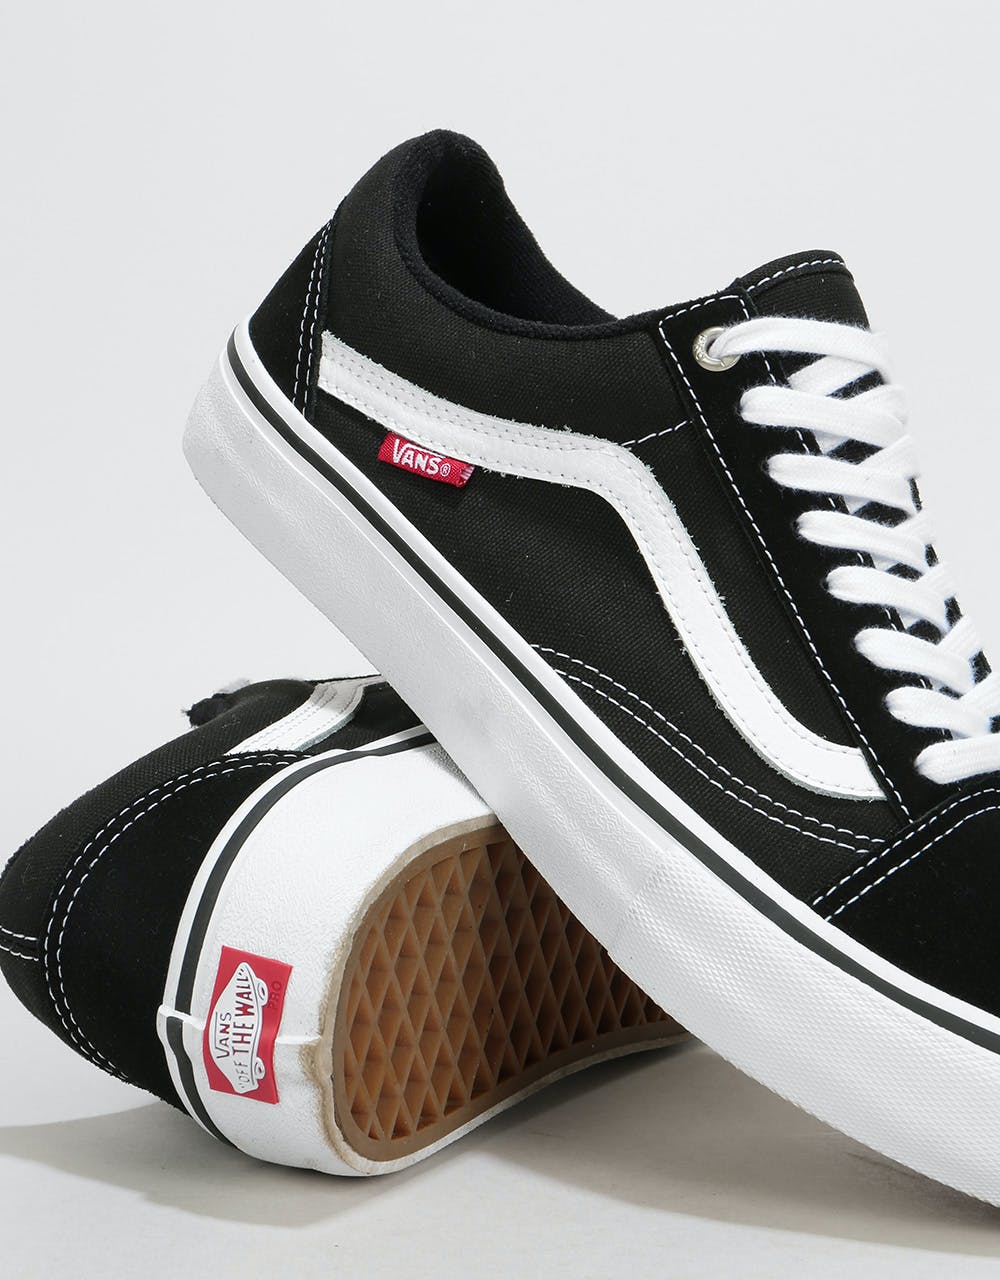 Vans Old Skool Pro Skate Shoes - Black/White